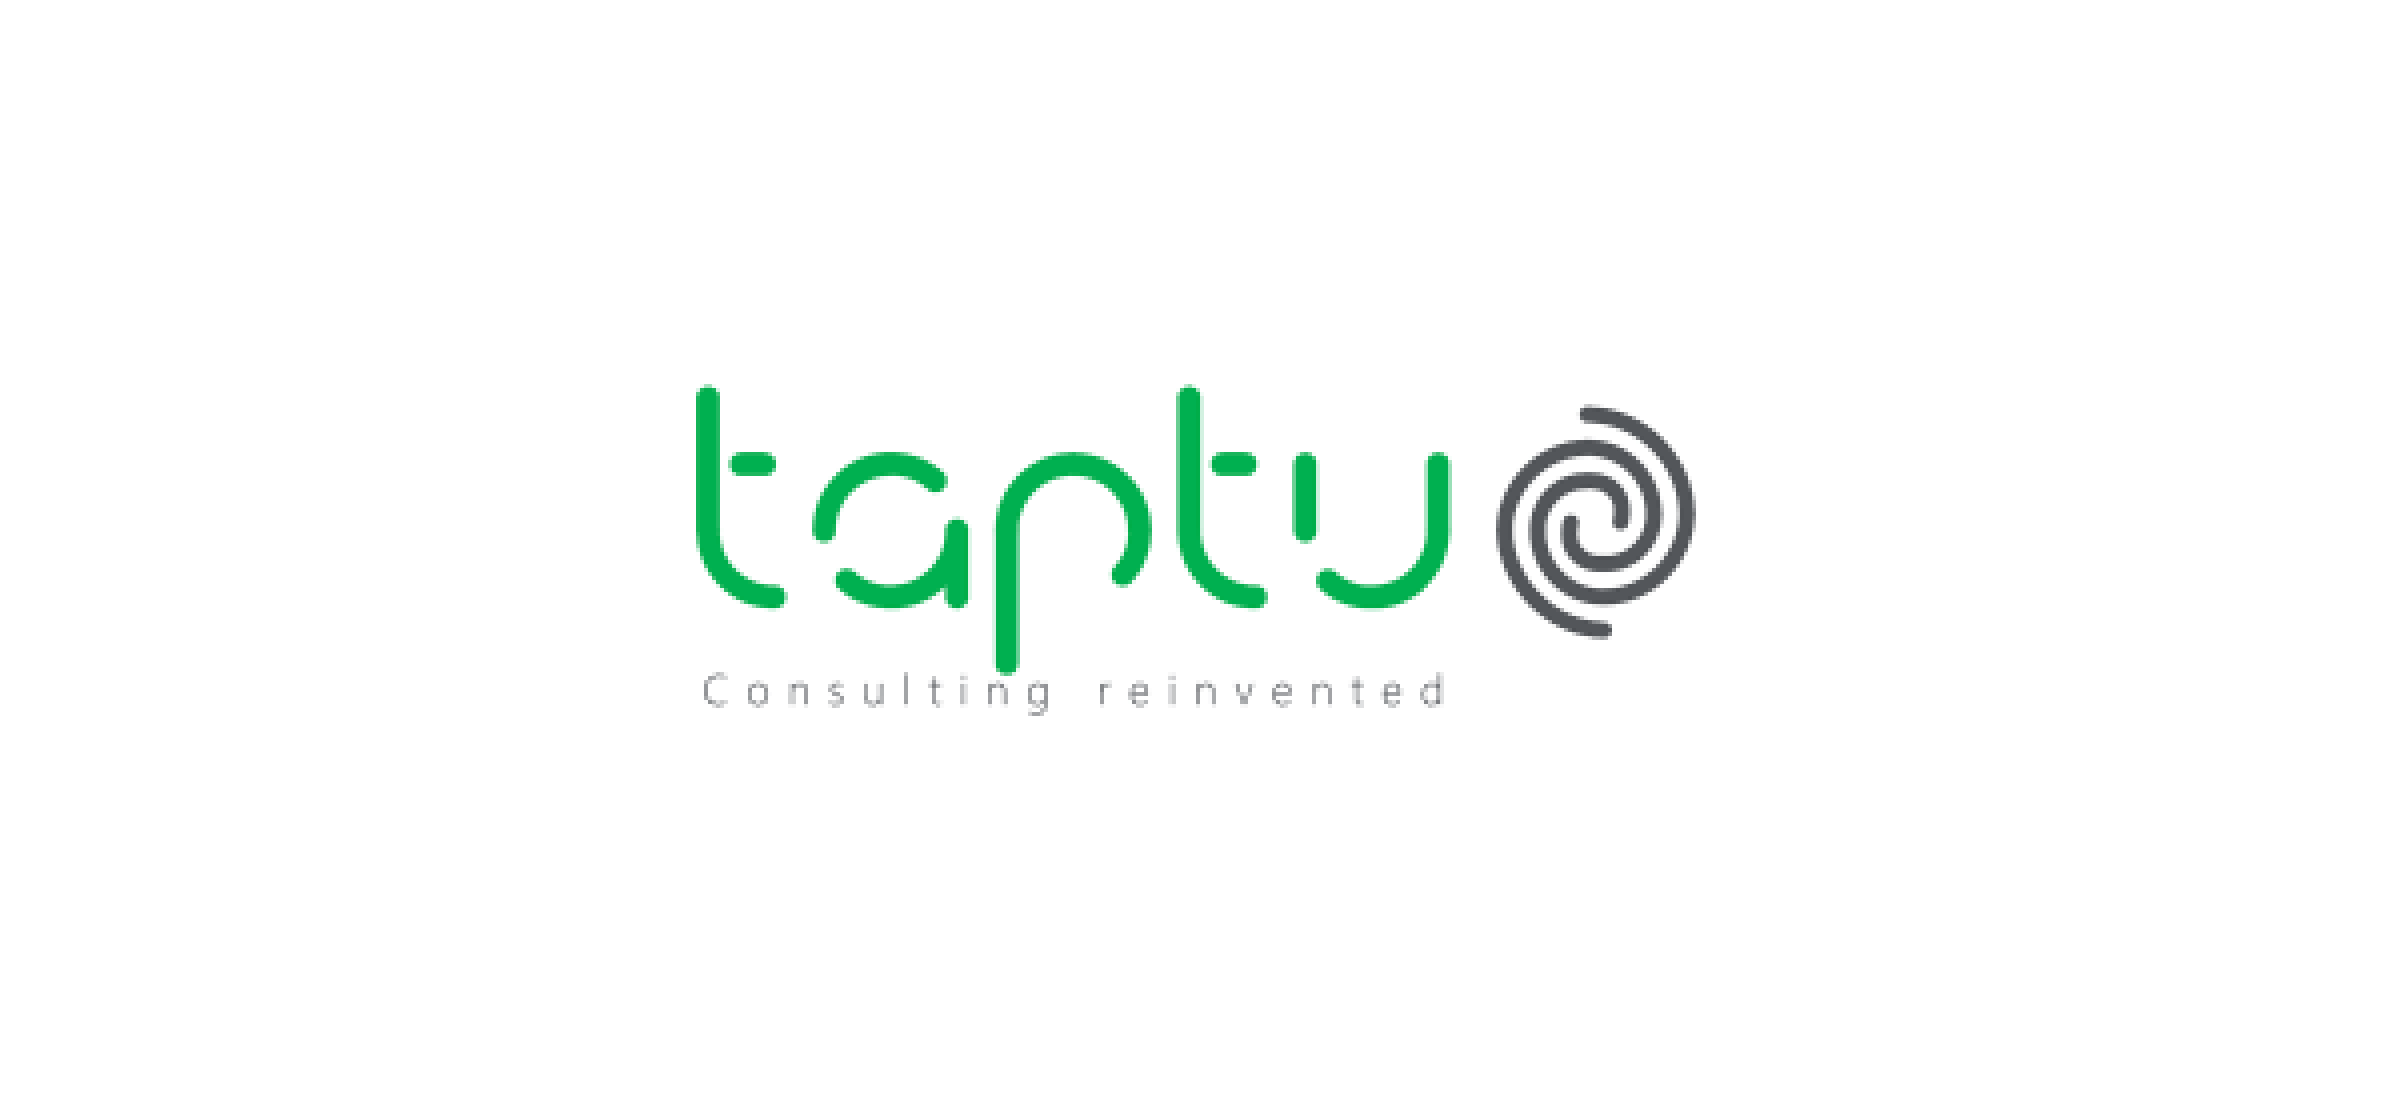 The Taptu logo